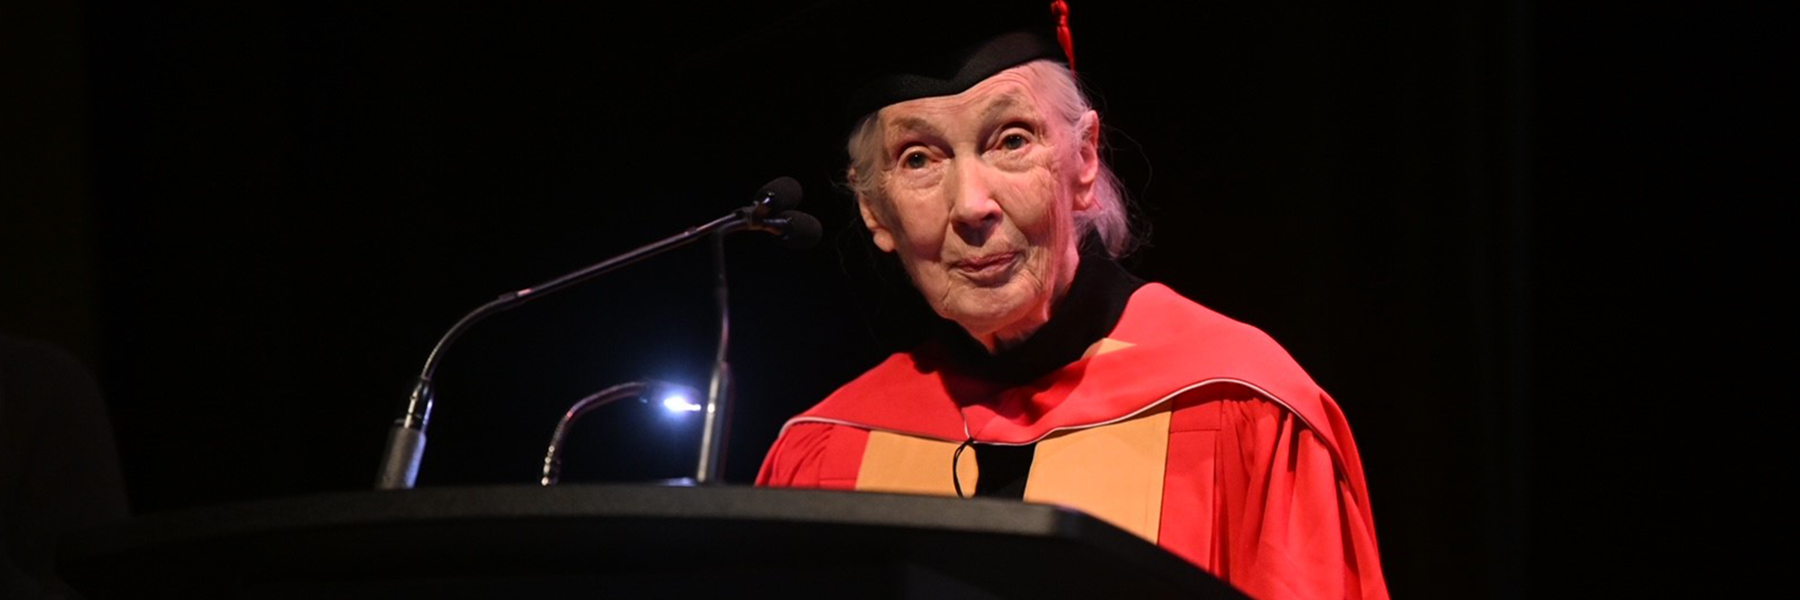 Jane Goodall at podium BANNER